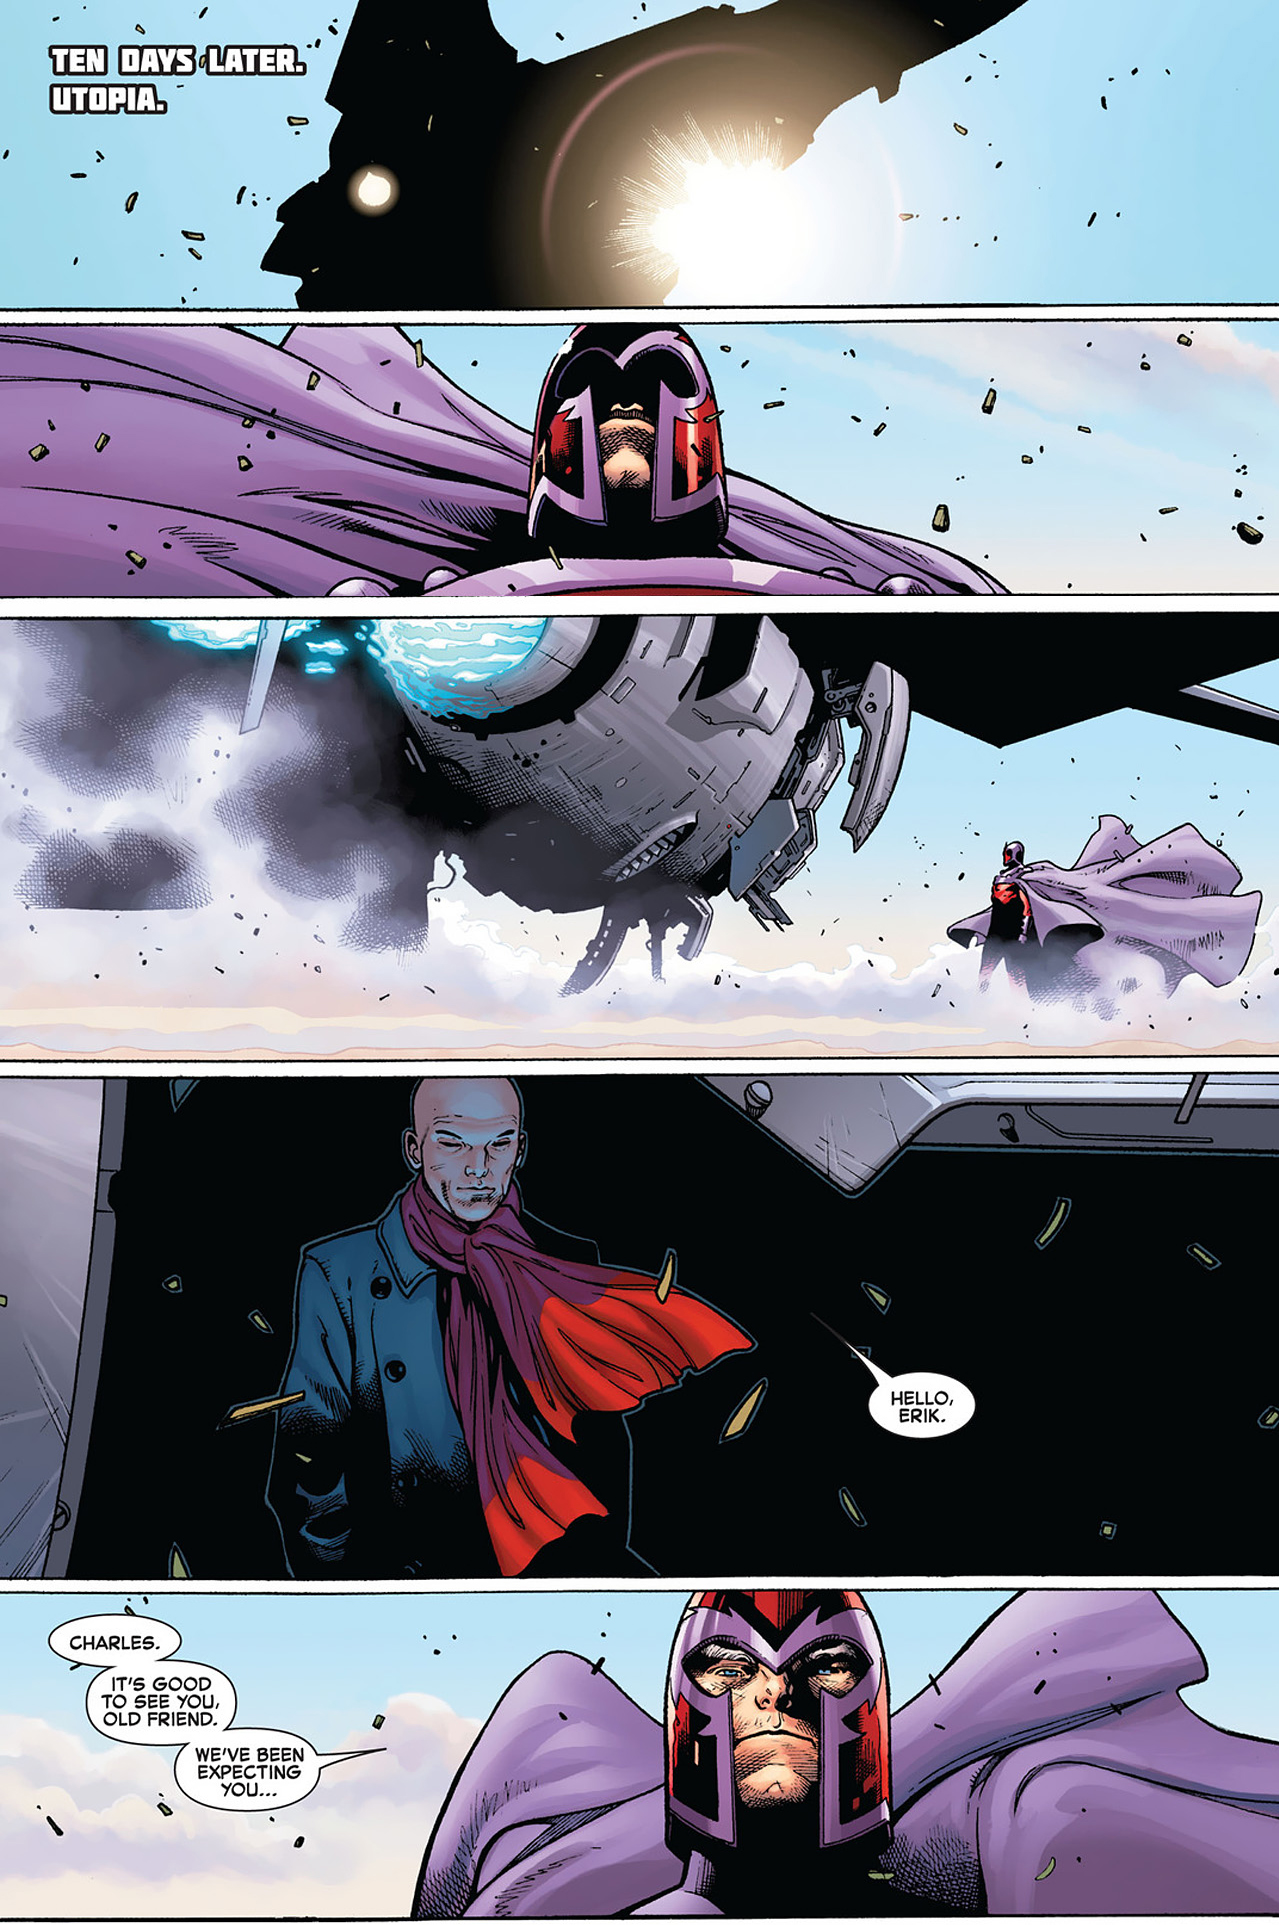 magneto welcomes professor x to utopia